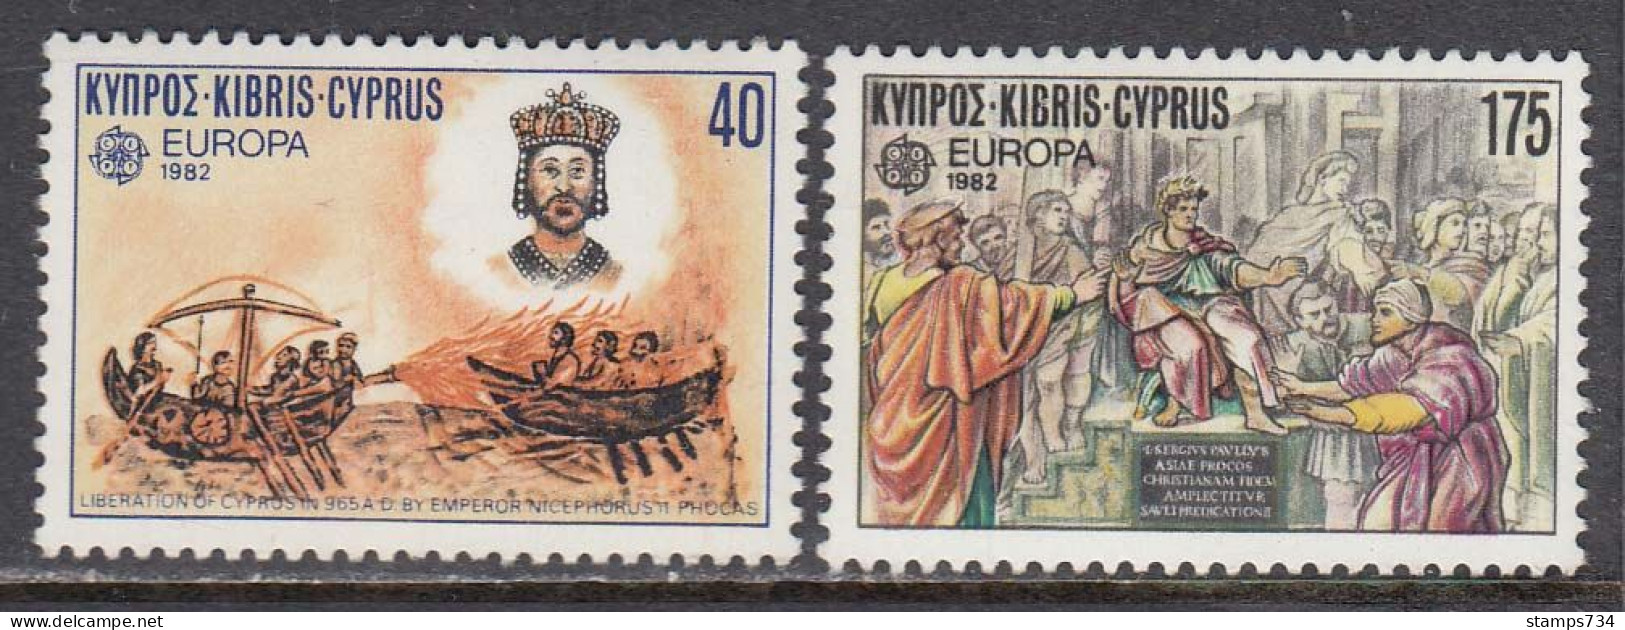 Cyprus 1982 - EUROPA(Faits Historiques), Mi-Nr. 566/67, MNH** - Ongebruikt